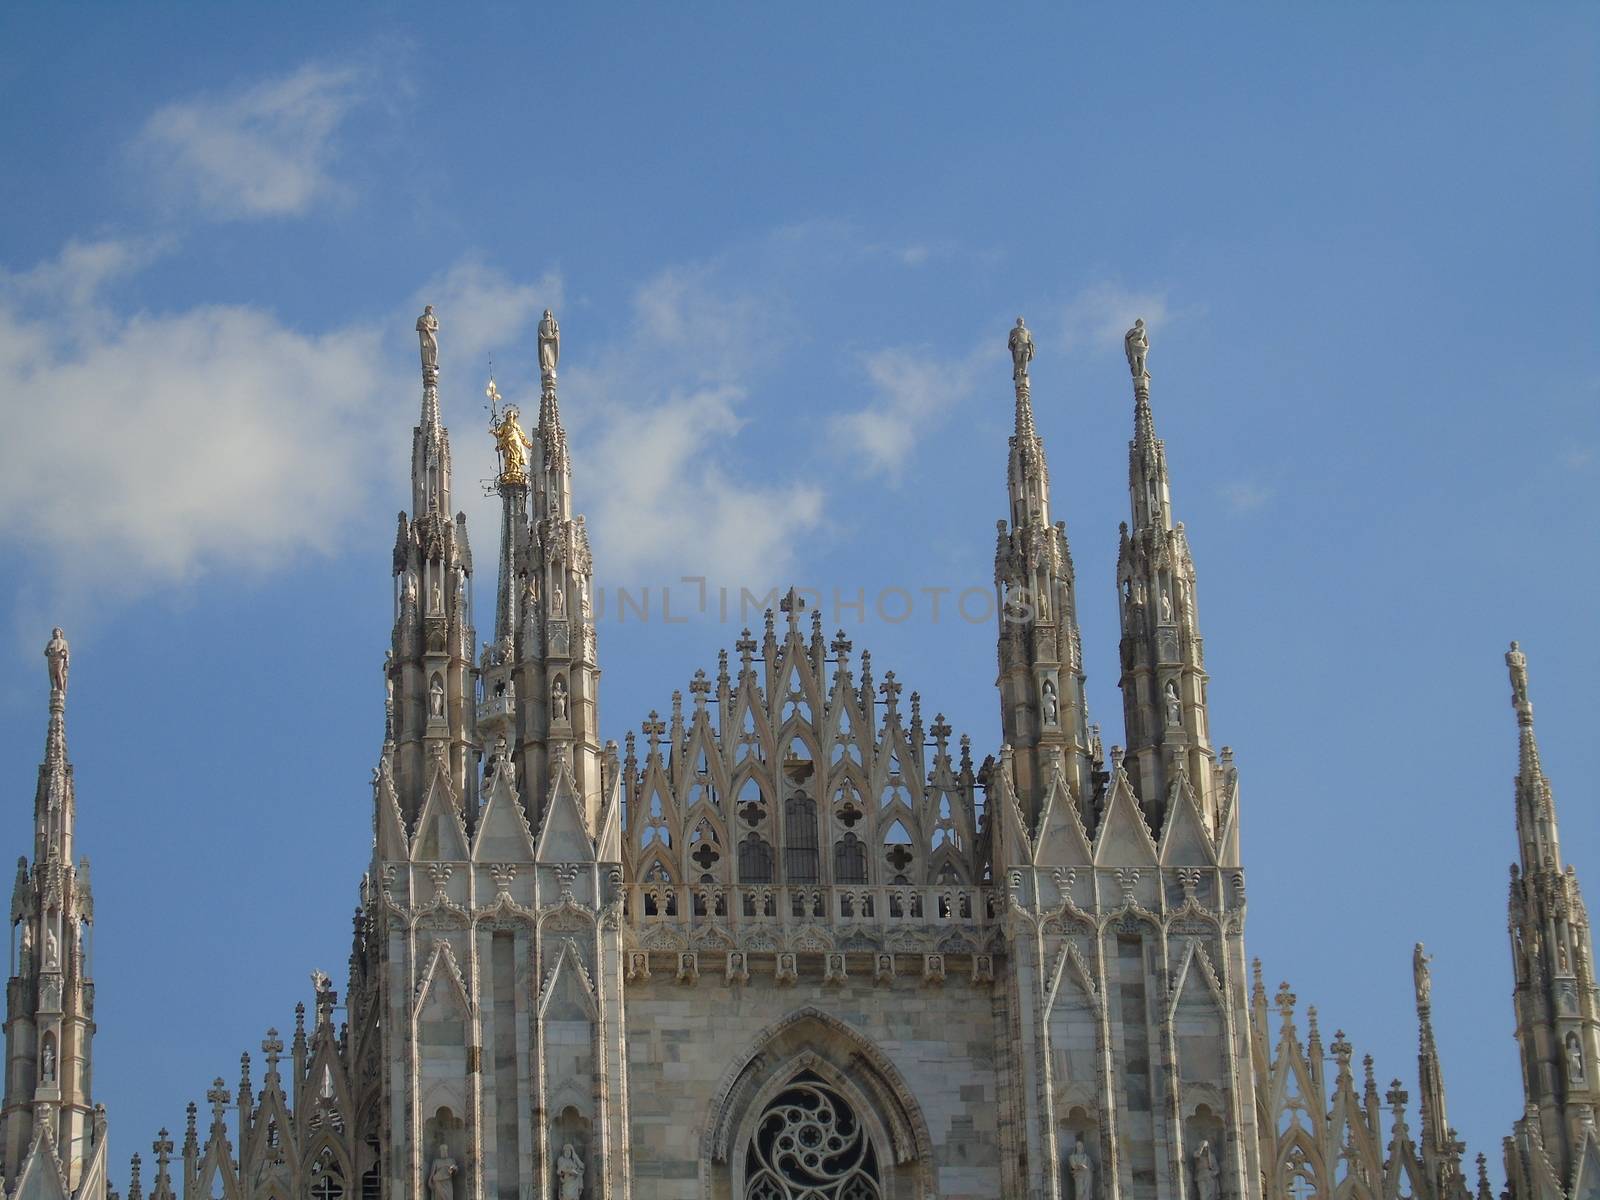 Galleria Vittorio Emanuele and Duomo of Milan by yohananegusse